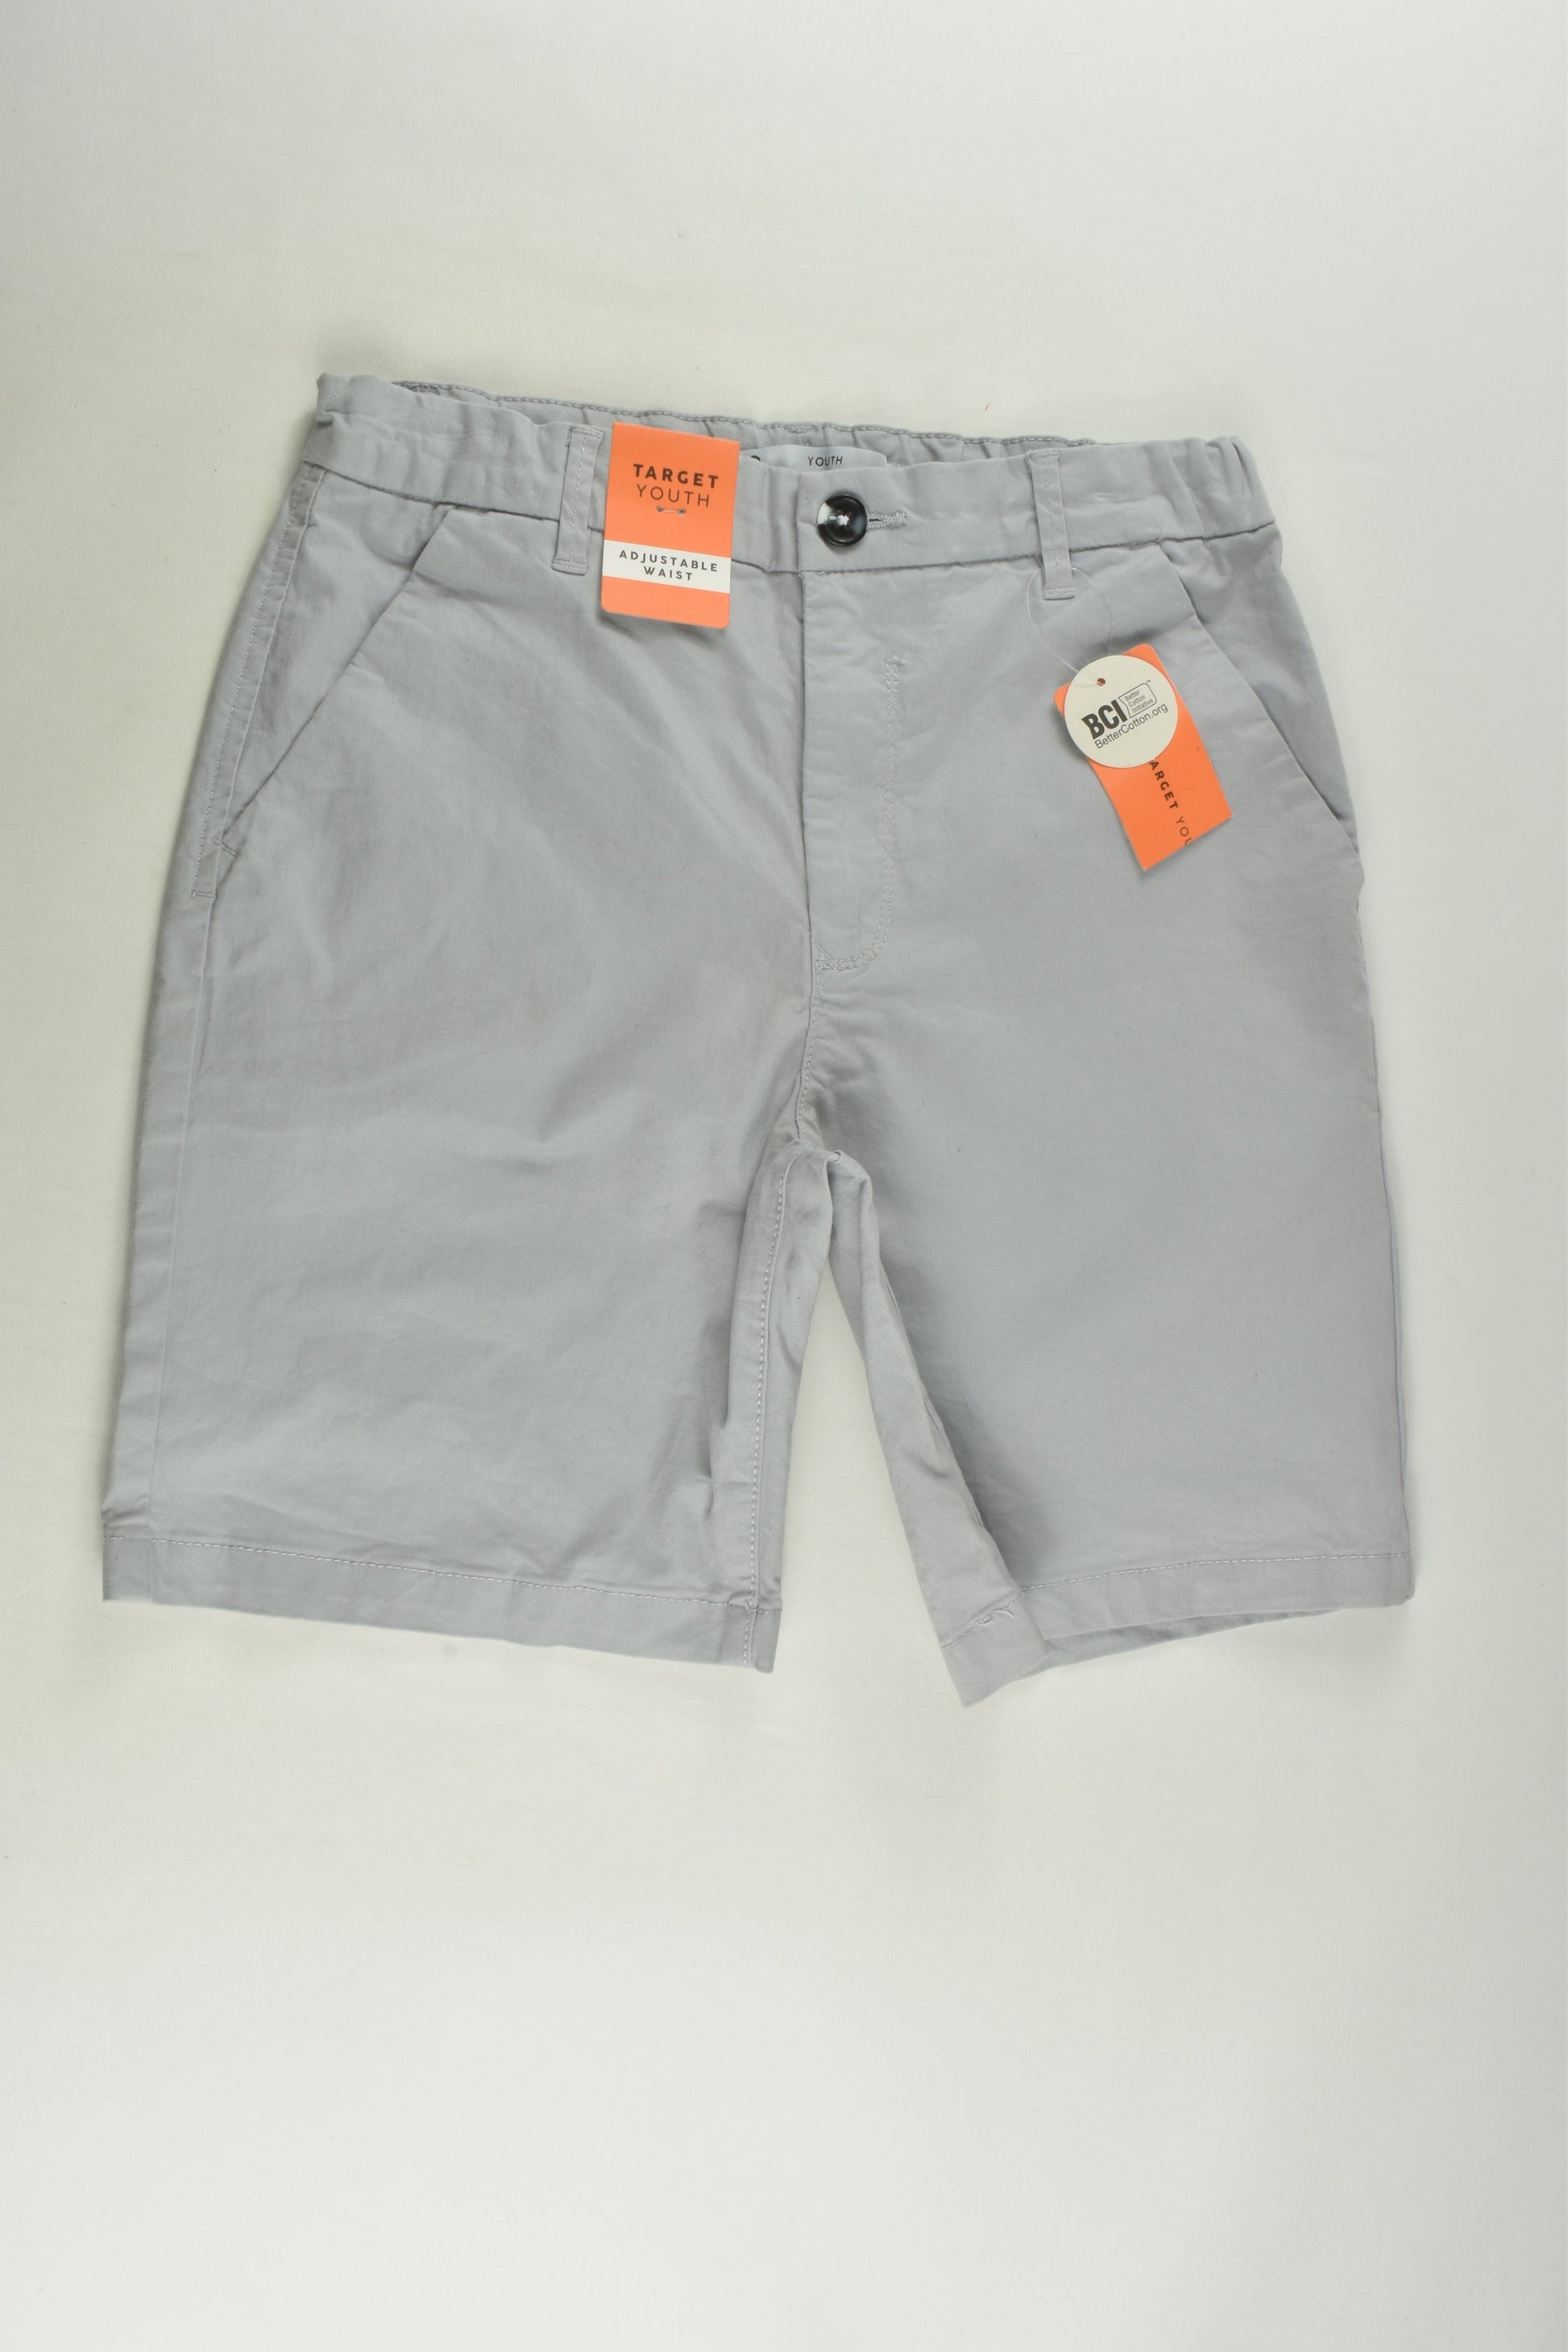 NEW Target Size 12 Chino Shorts